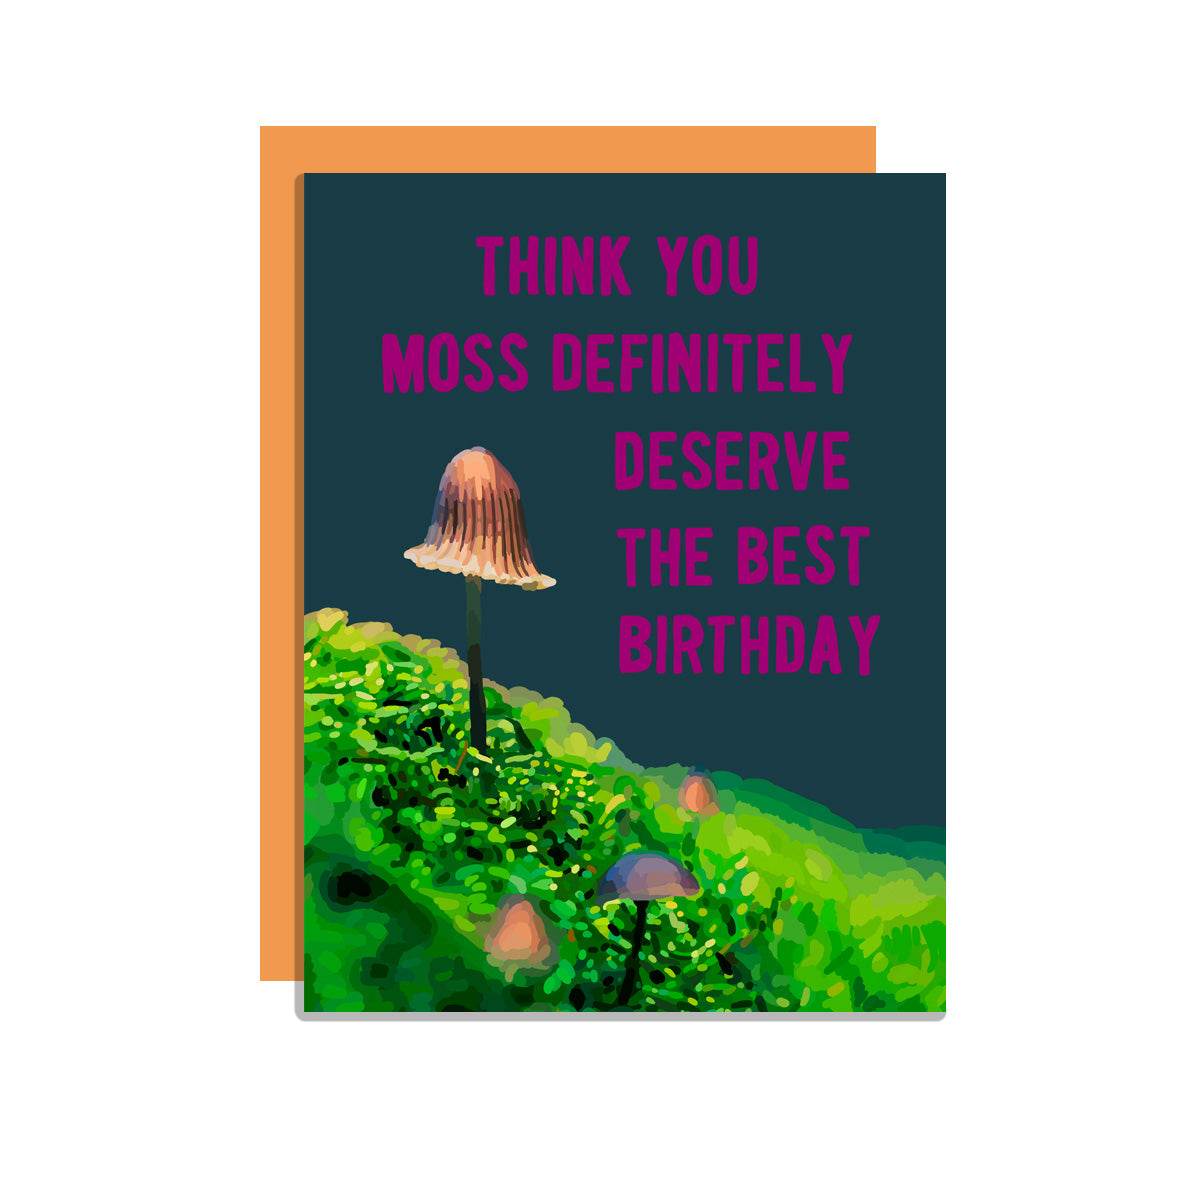 Moss Definitely Card